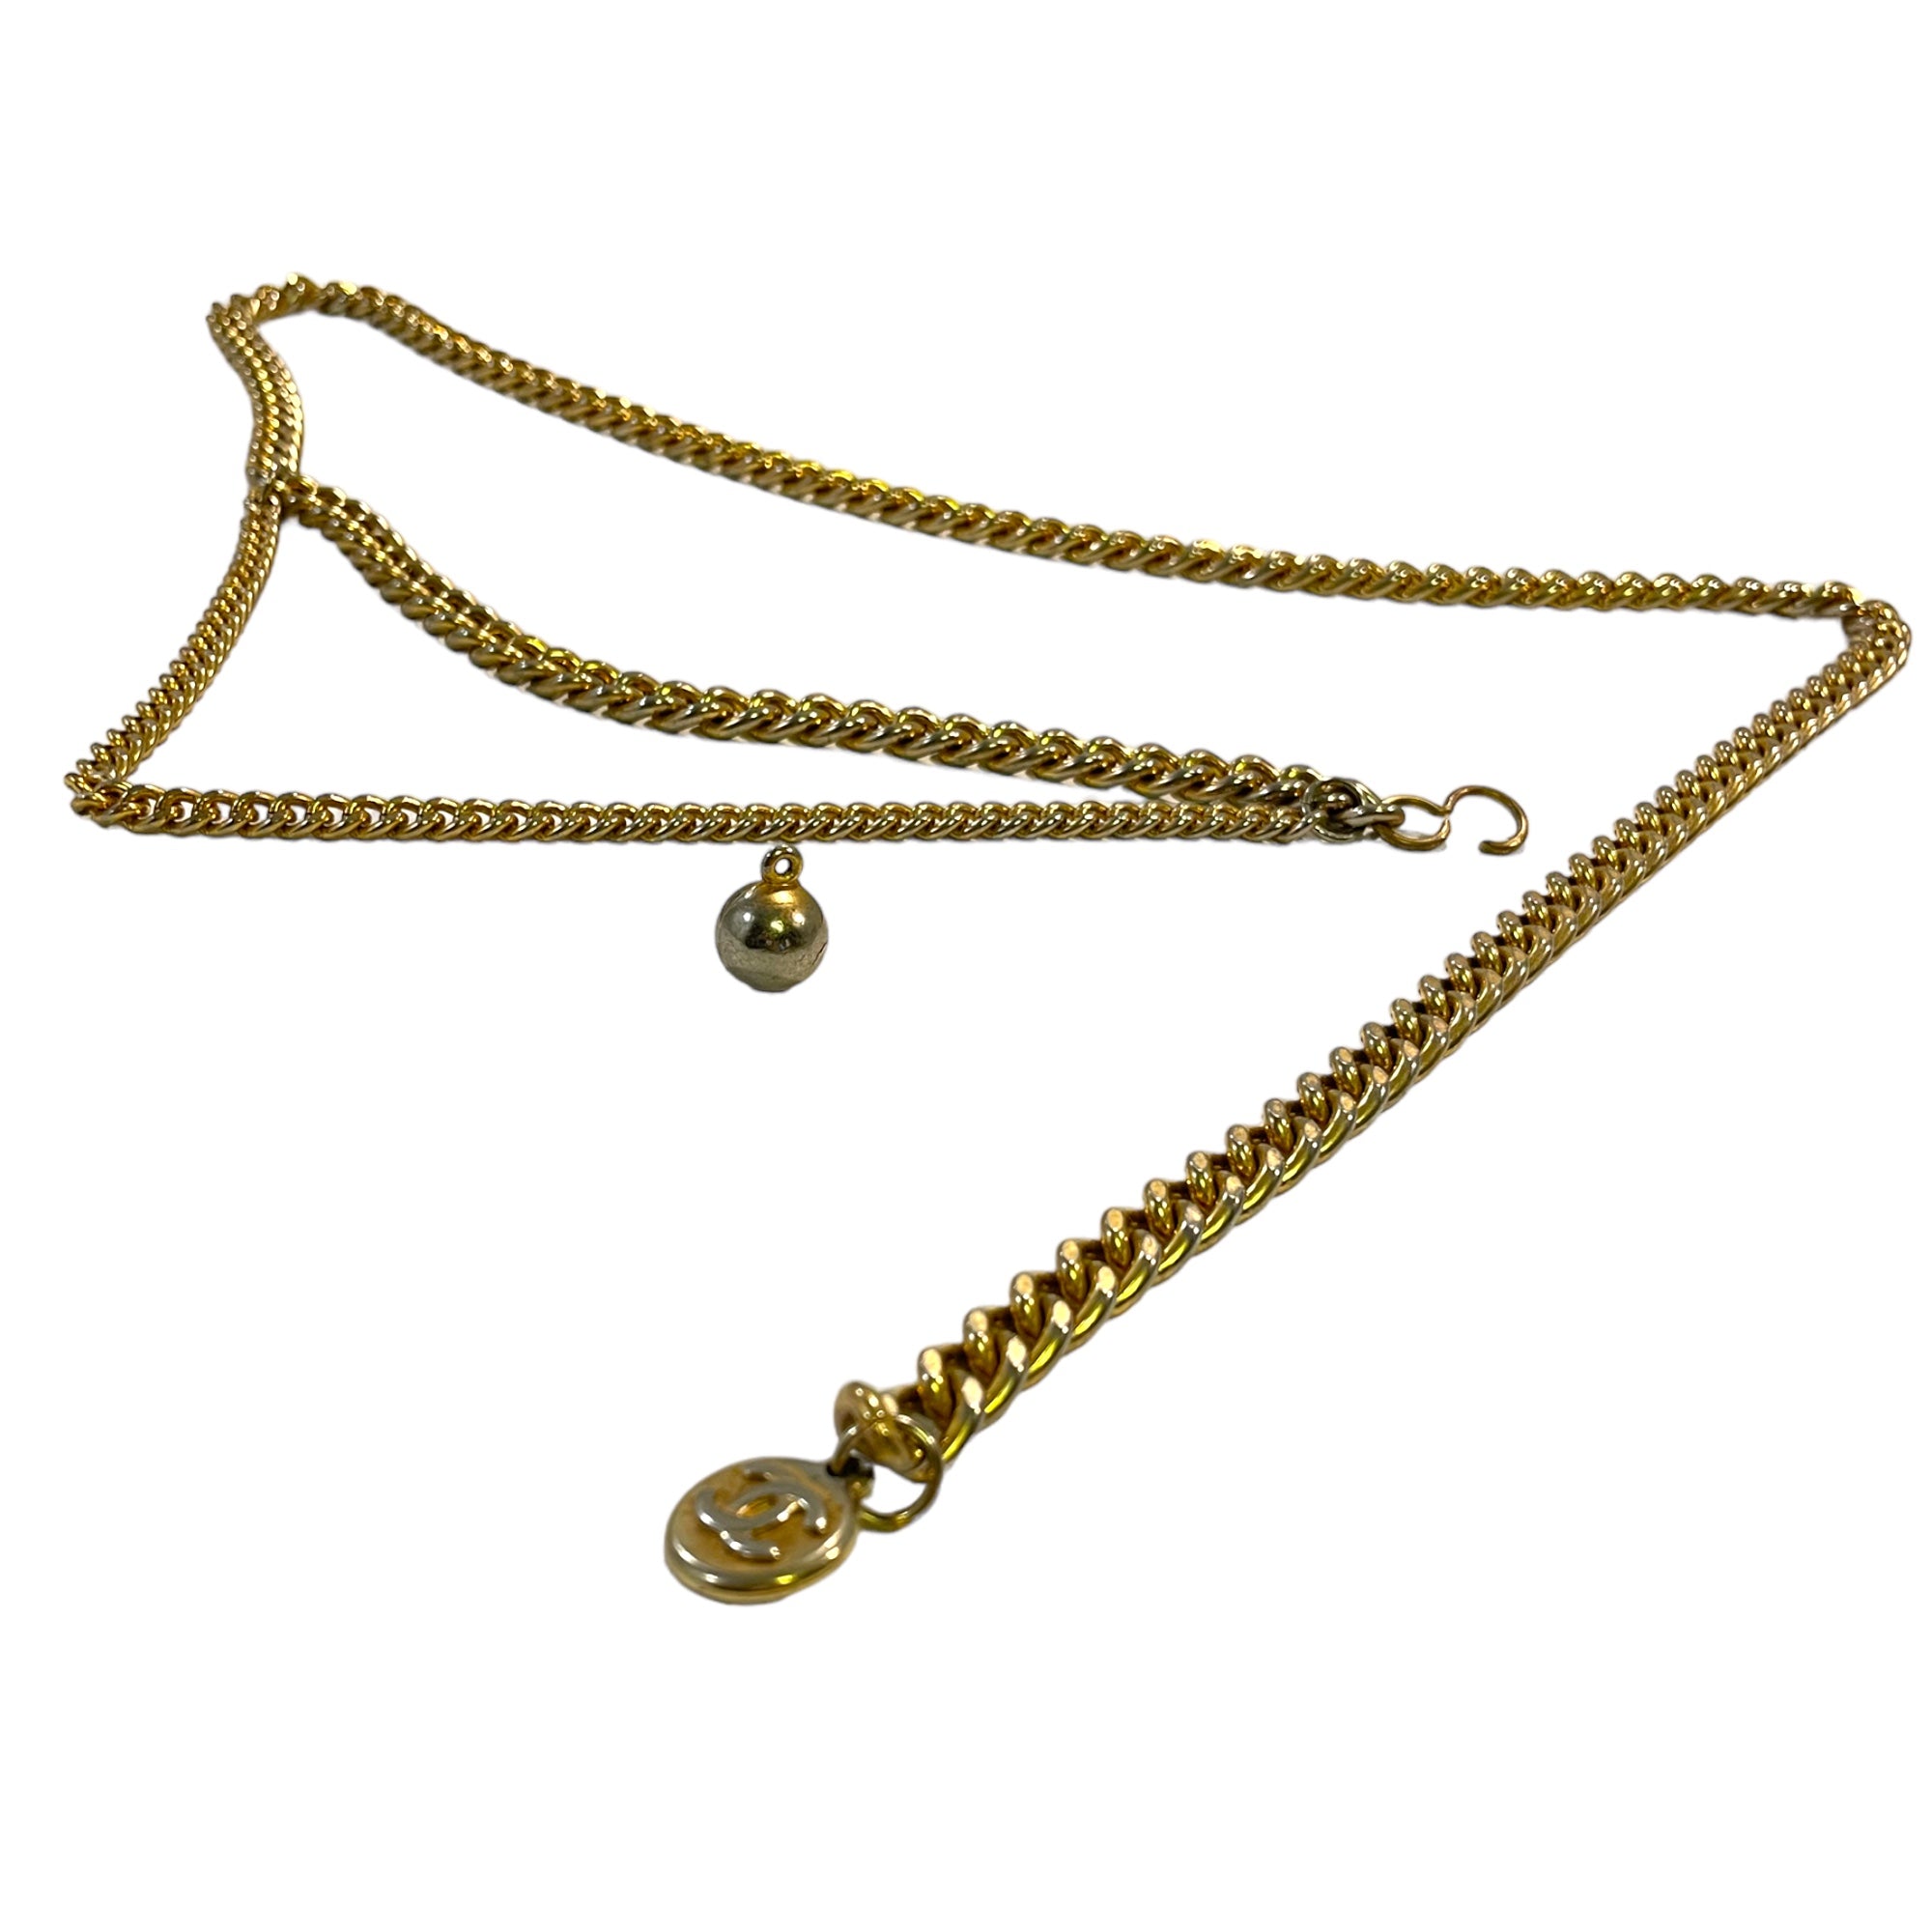 Vintage Brass Cuban Chainlink Belt with Solid Sphere Pendant & Vintage Authentic Chanel Pendant